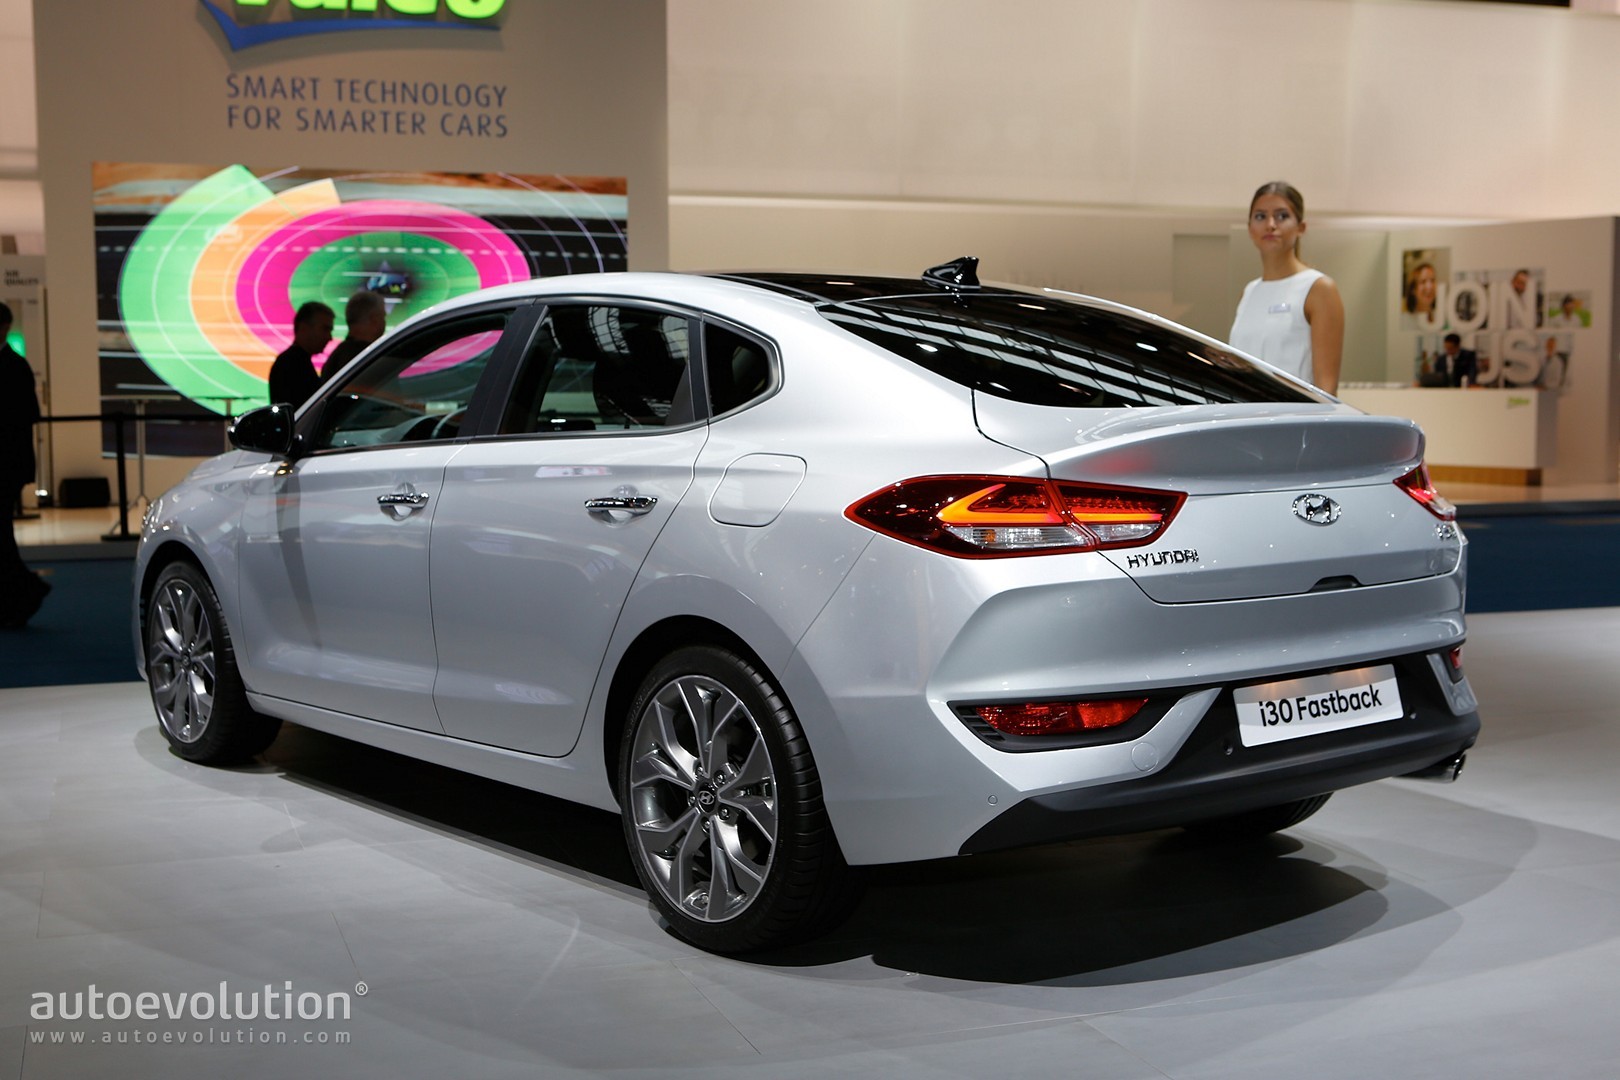 Hyundai i30 Fastback Is Not a Mustang in Frankfurt - autoevolution